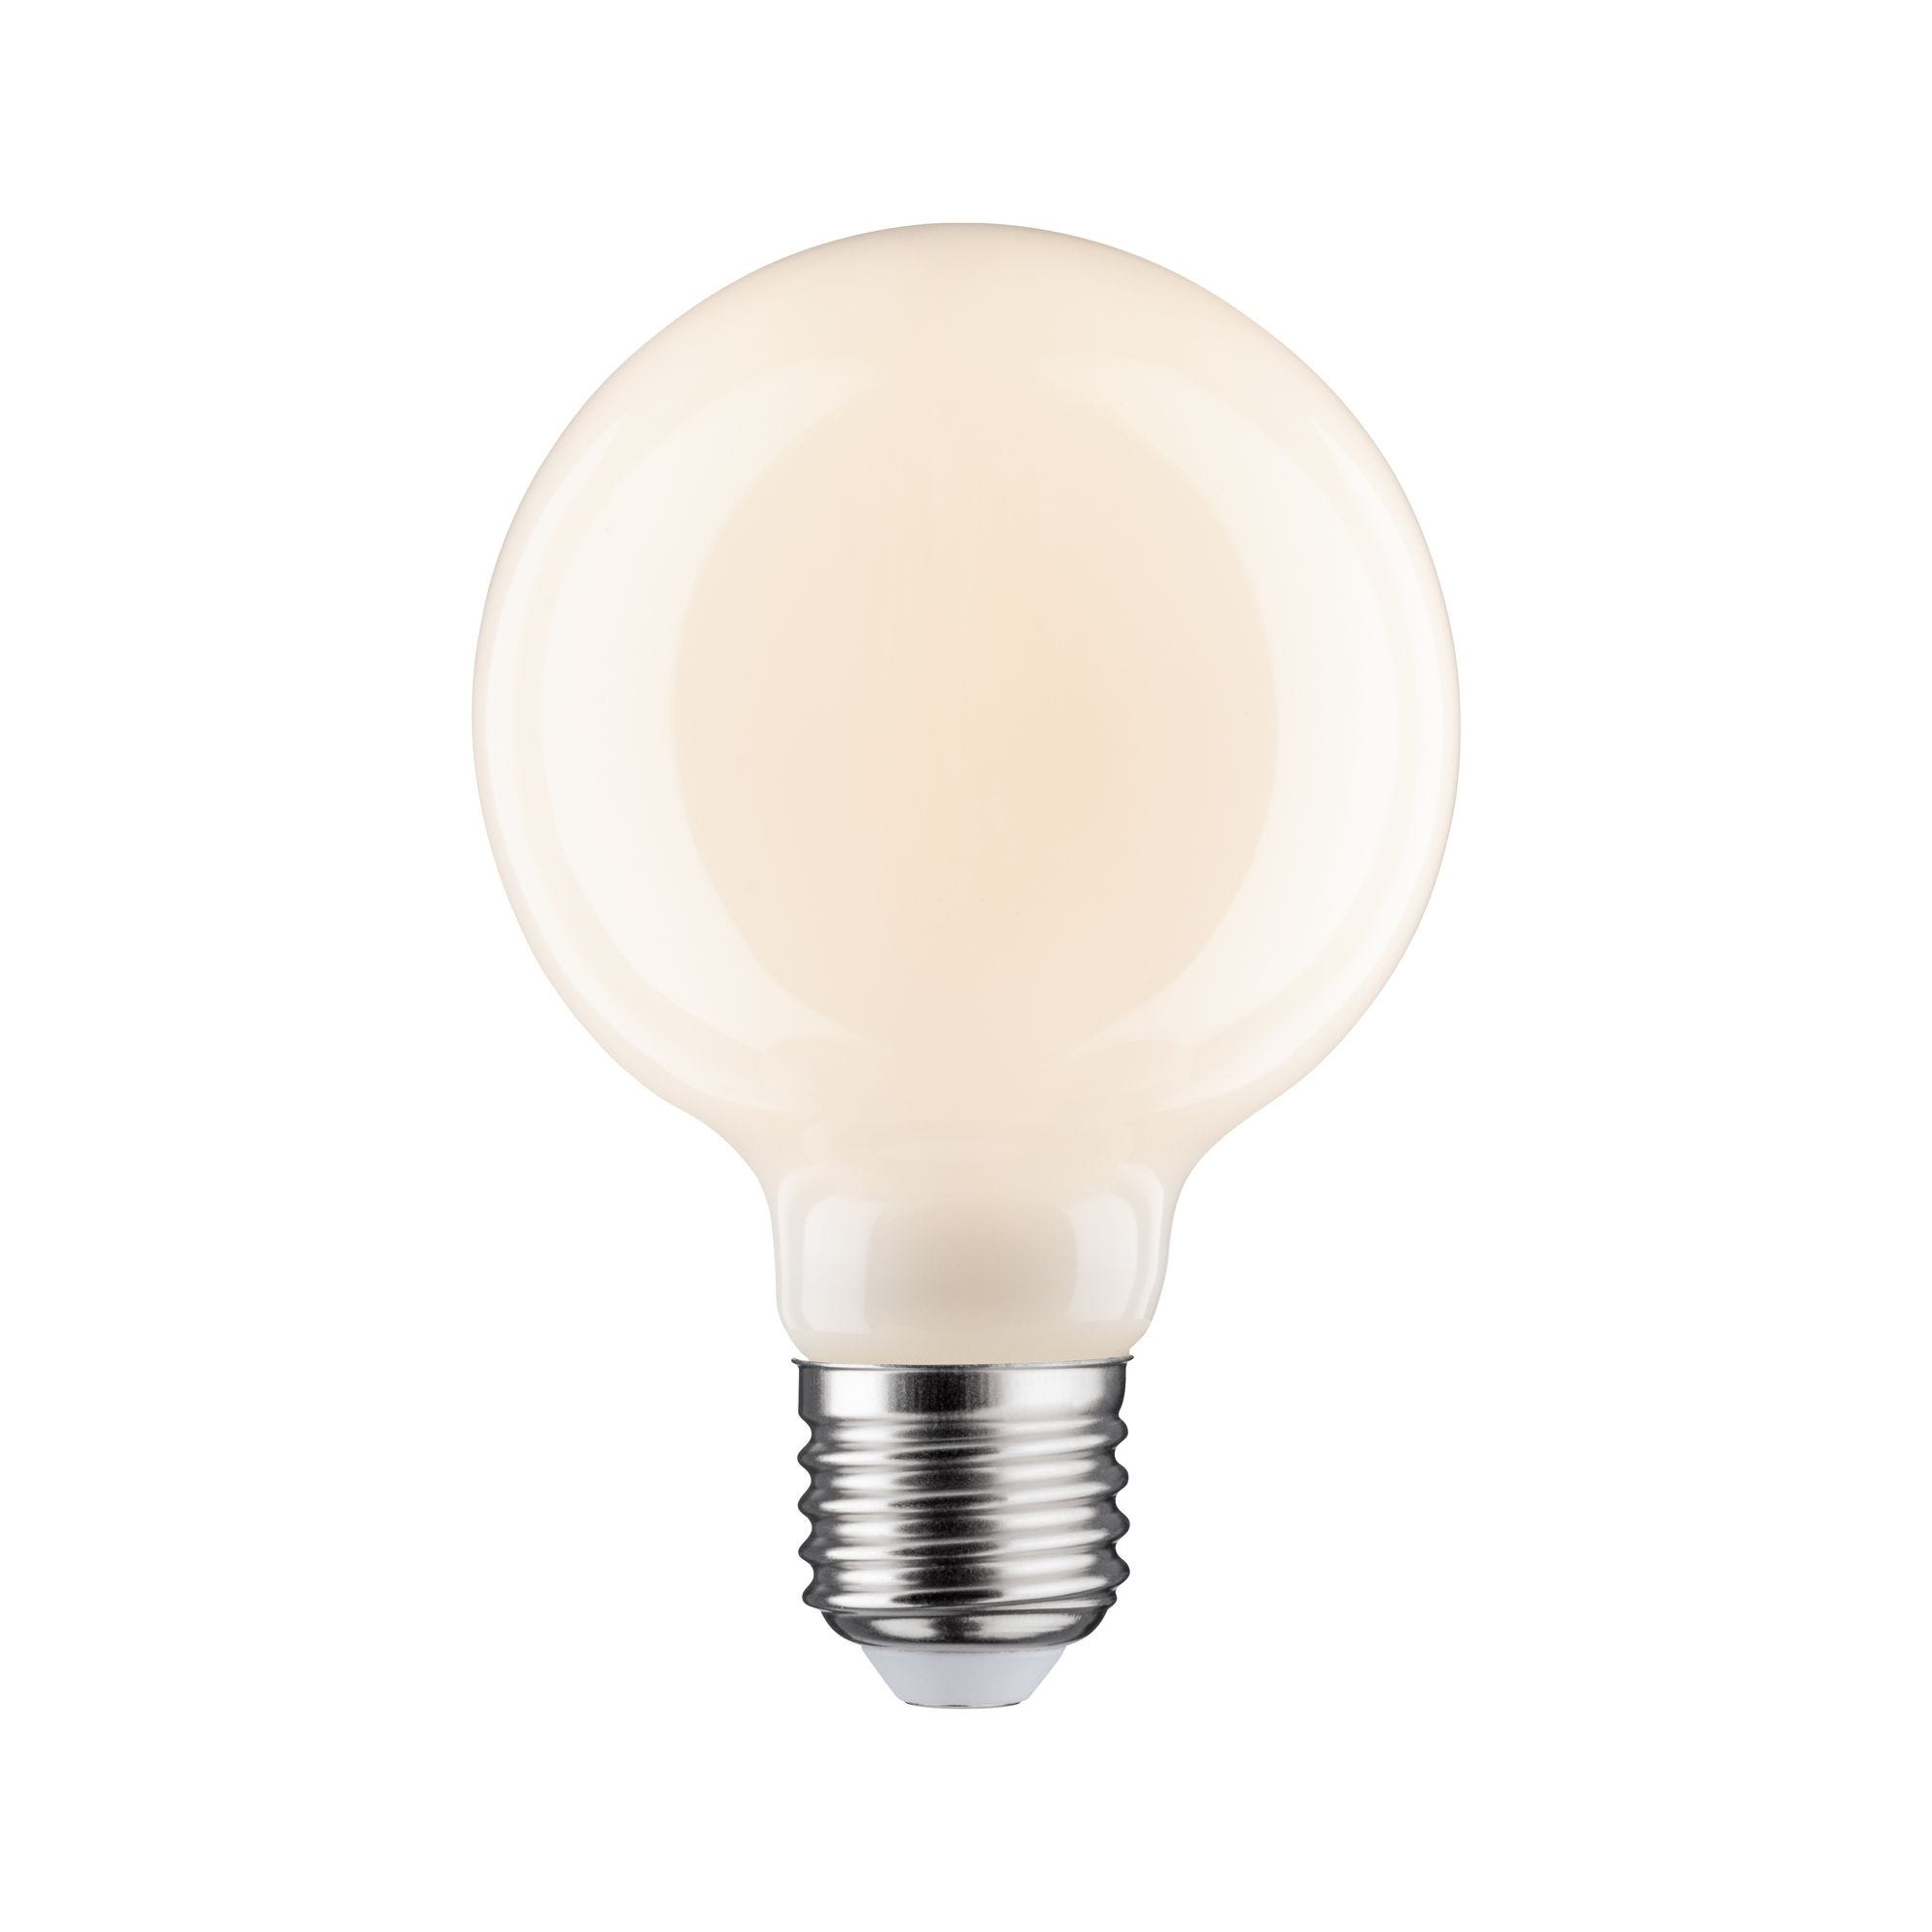 Ampoule led filament carbone, globe 125mm, E27, 45W, blanc très chaud,  LEXMAN